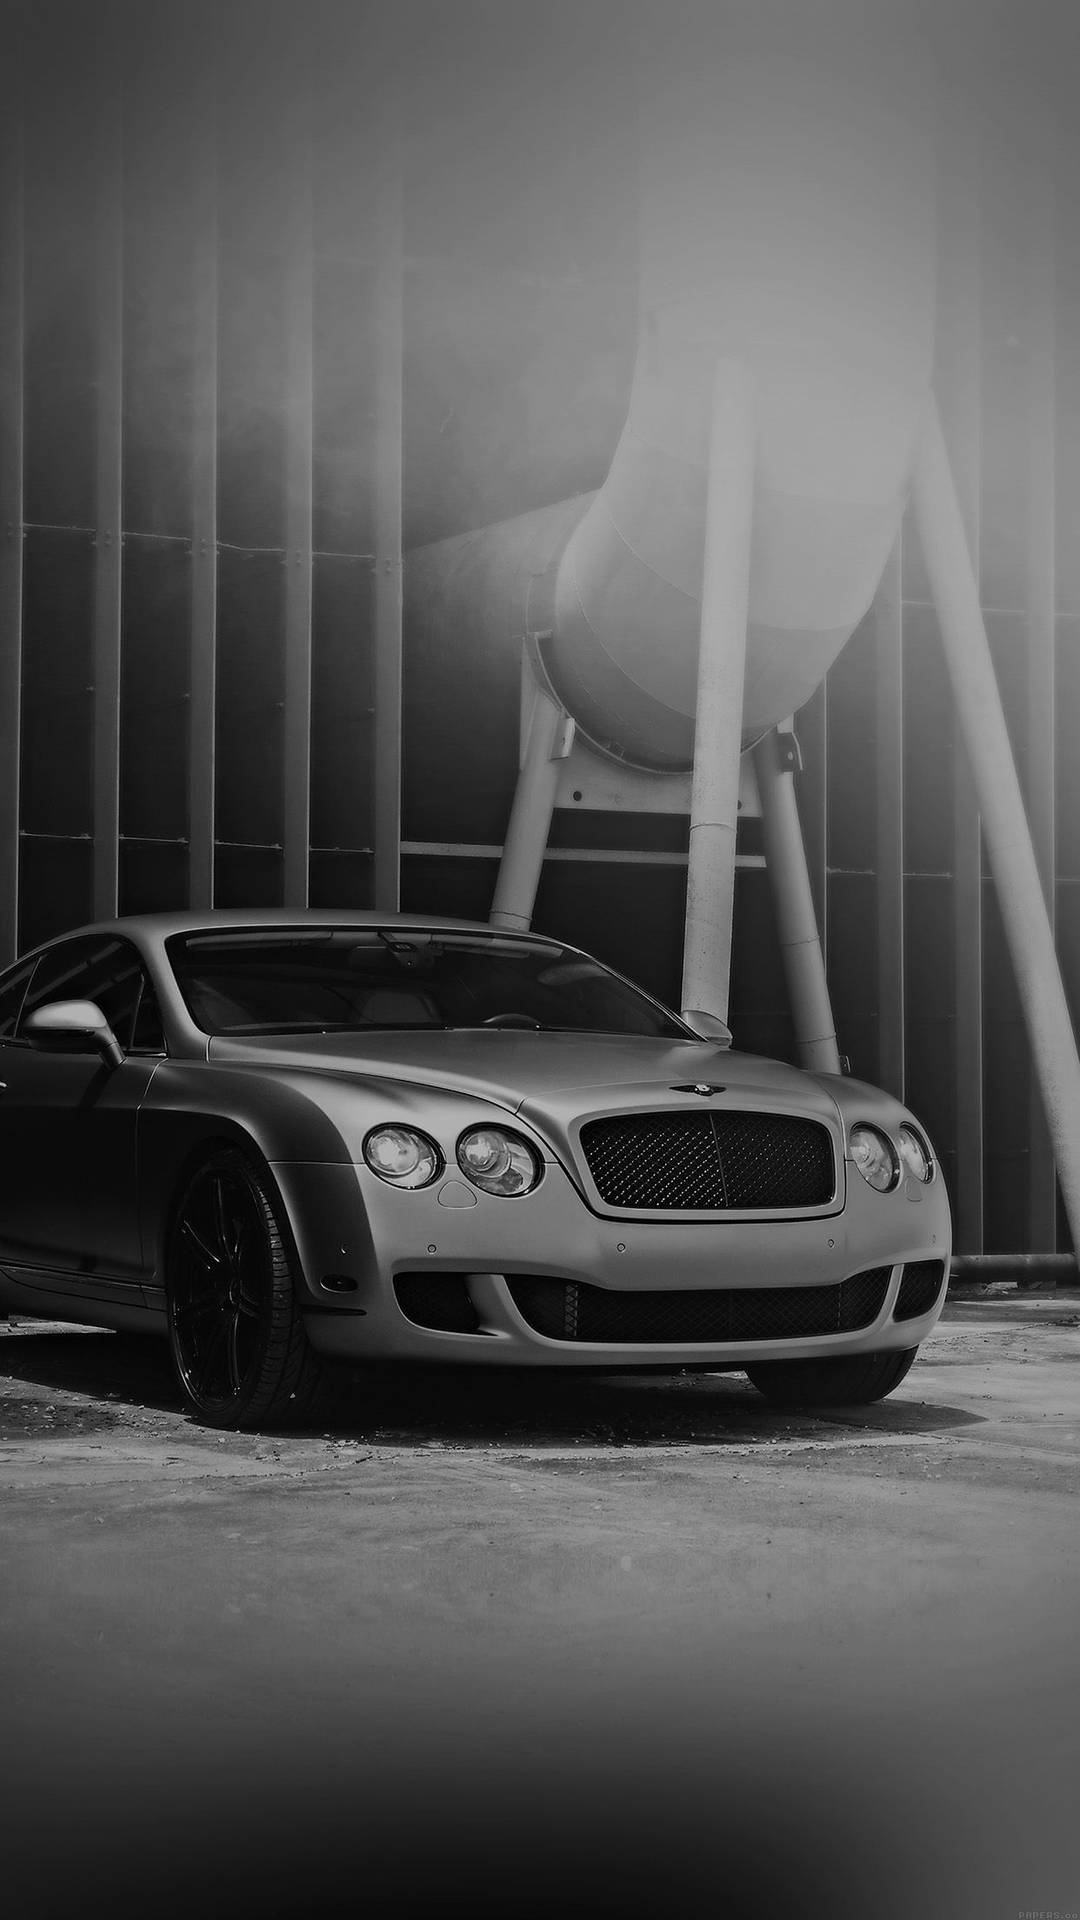 Greyscale Bentley iPhone Wallpaper